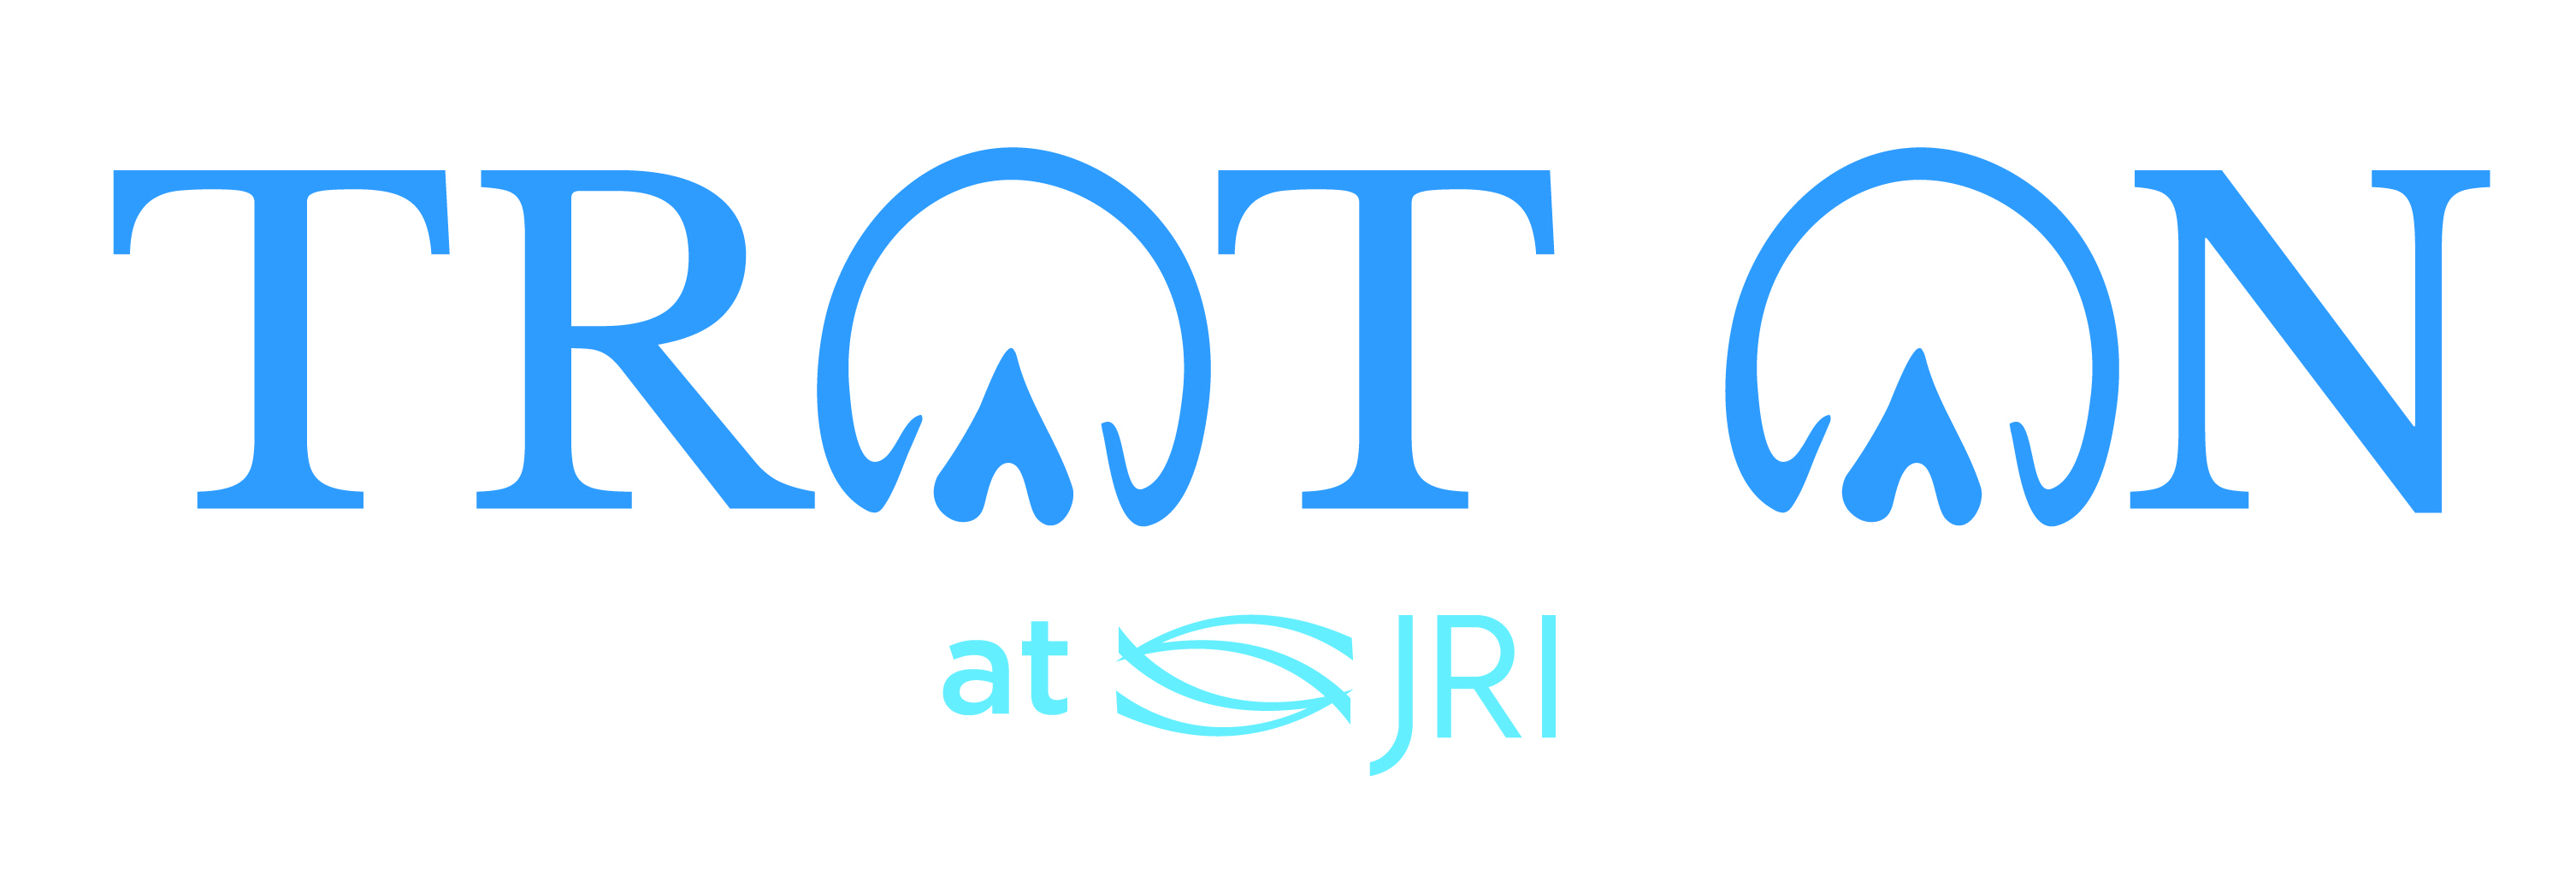 Trot On at JRI logo in blue